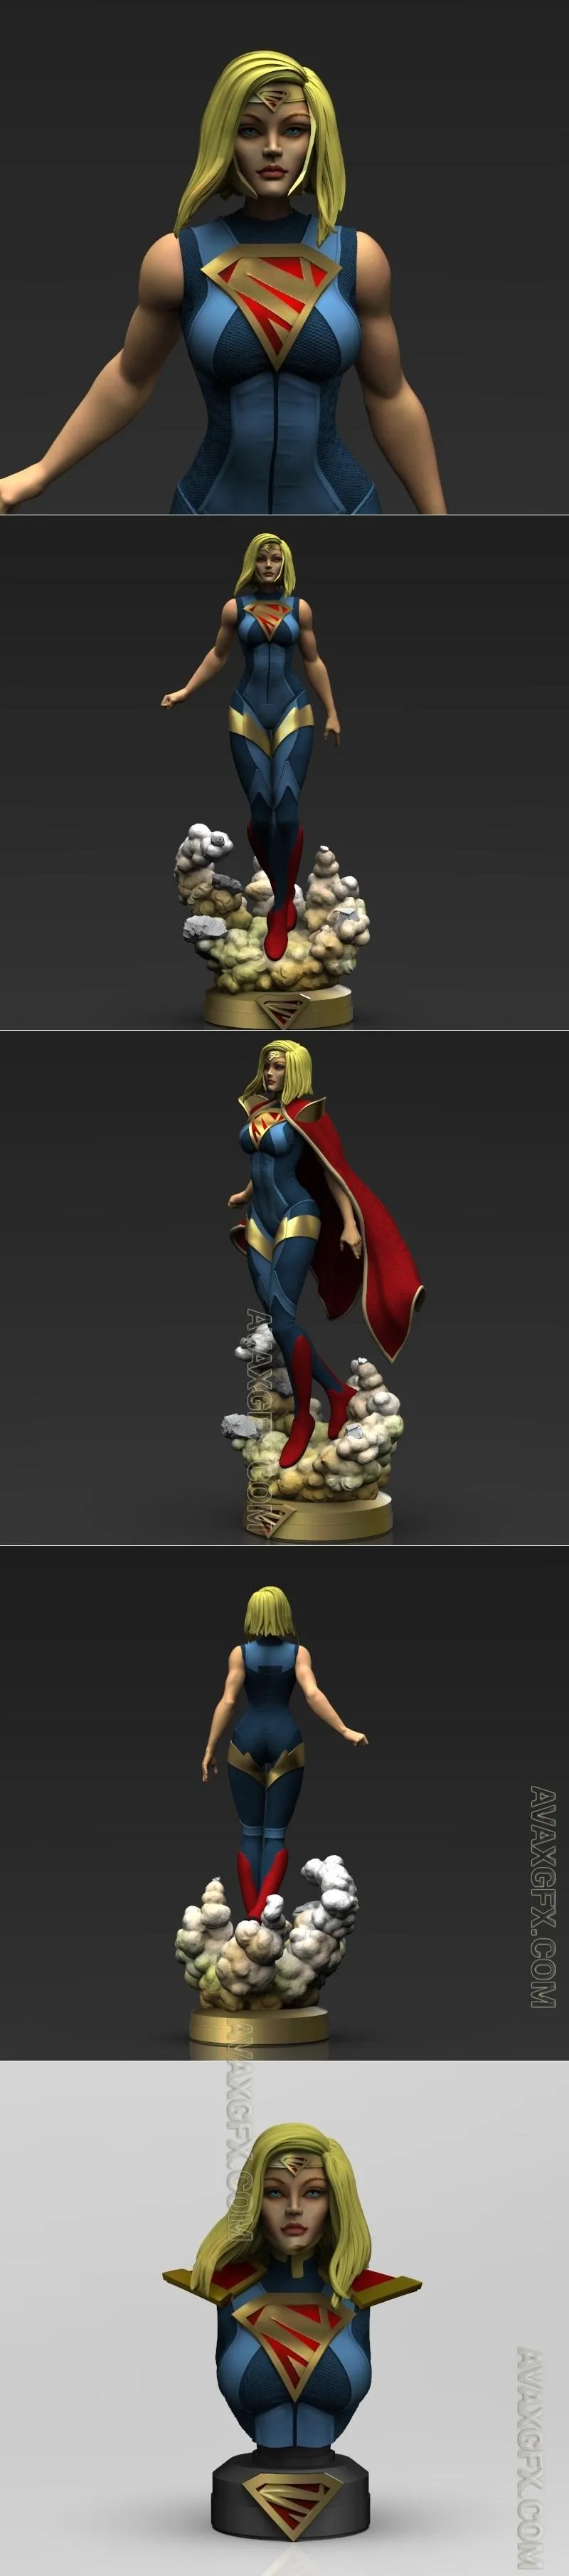 CG Pyro Digital Artist - Supergirl from Injustice Superman of DC Comics - STL 3D Model